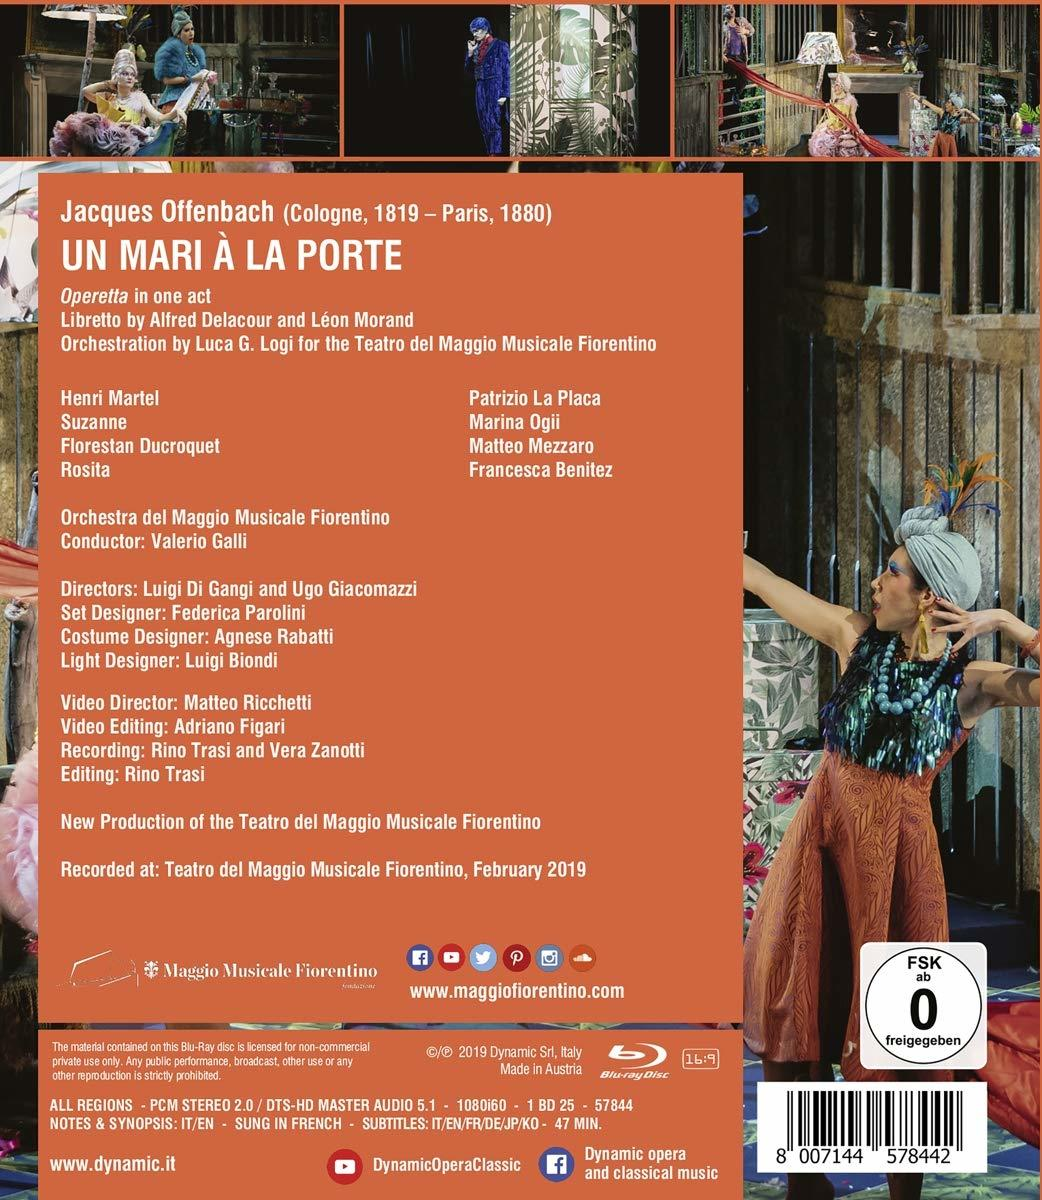 La Placa/Ogii/Mezzaro/Benitez/Galli/+ - Un mari a la porte - (Blu-ray) [Blu-ray